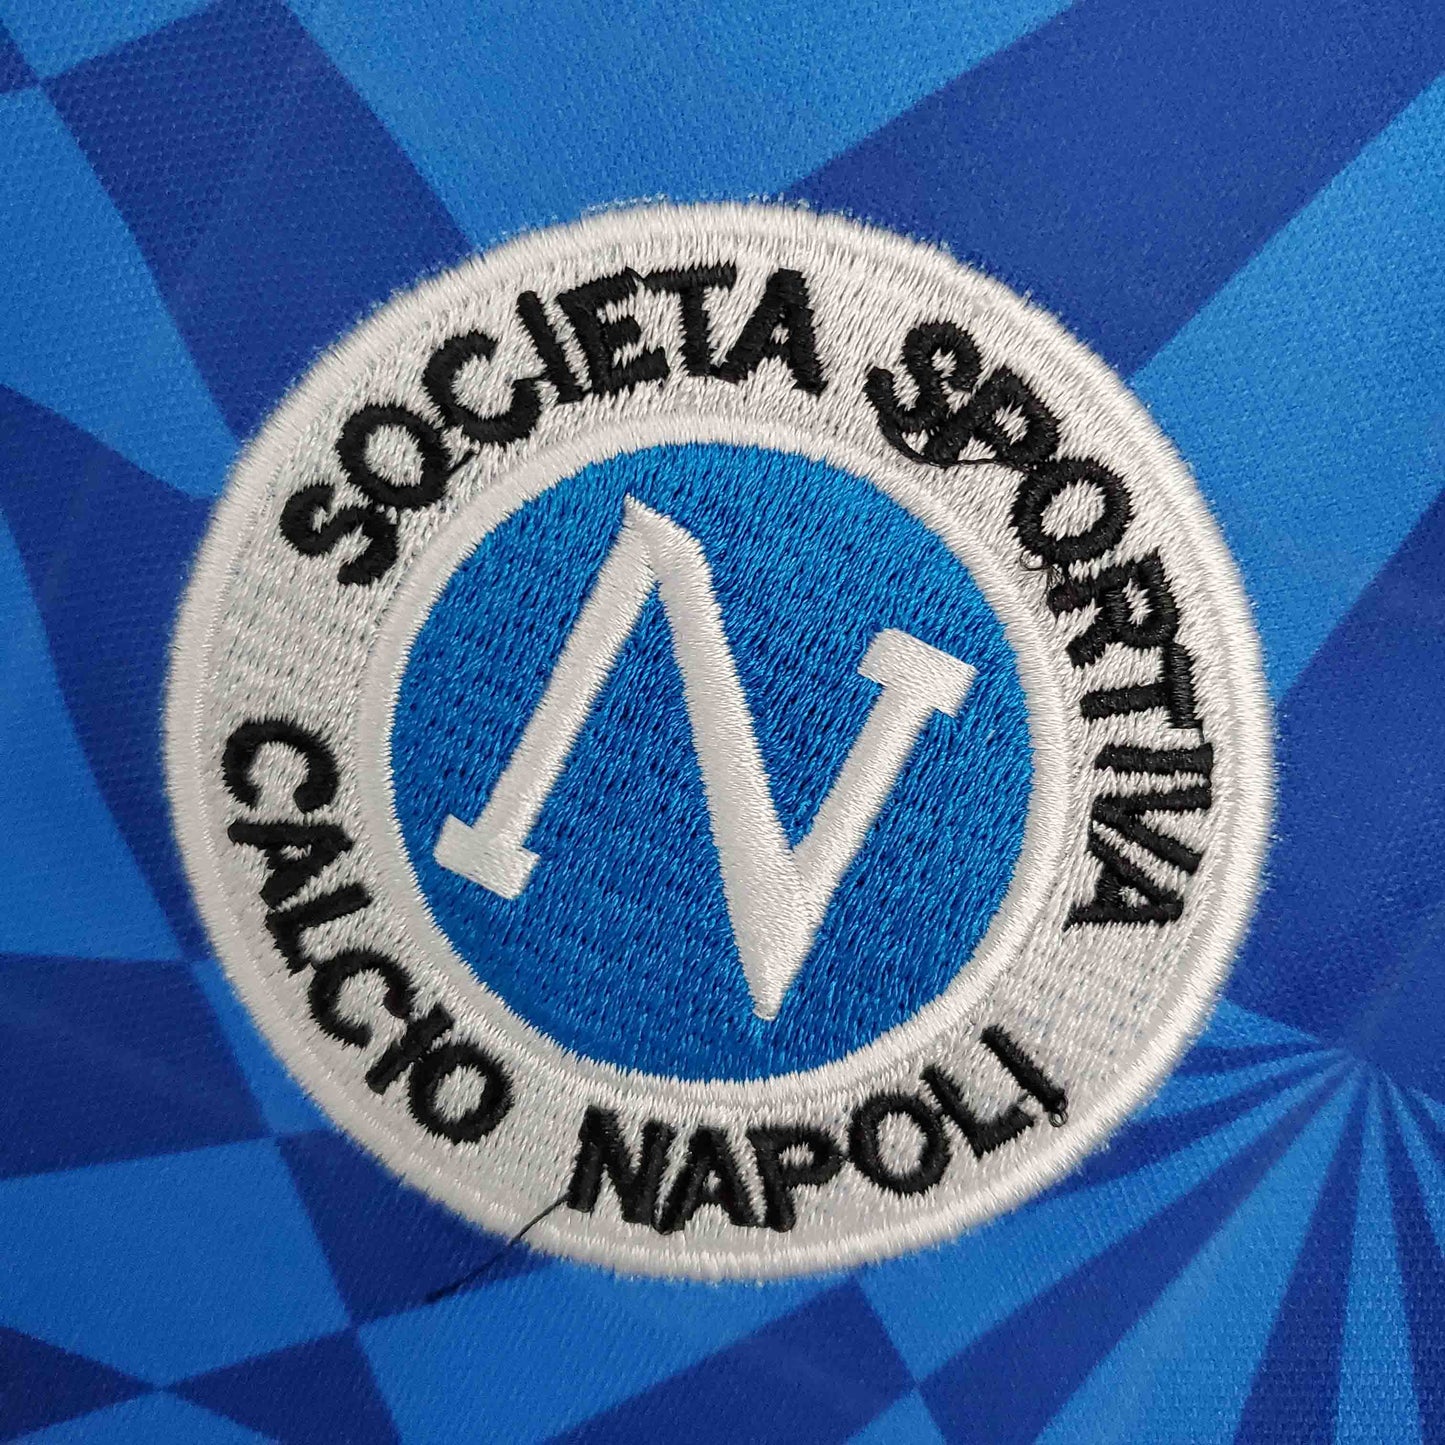 Napoli 91-92